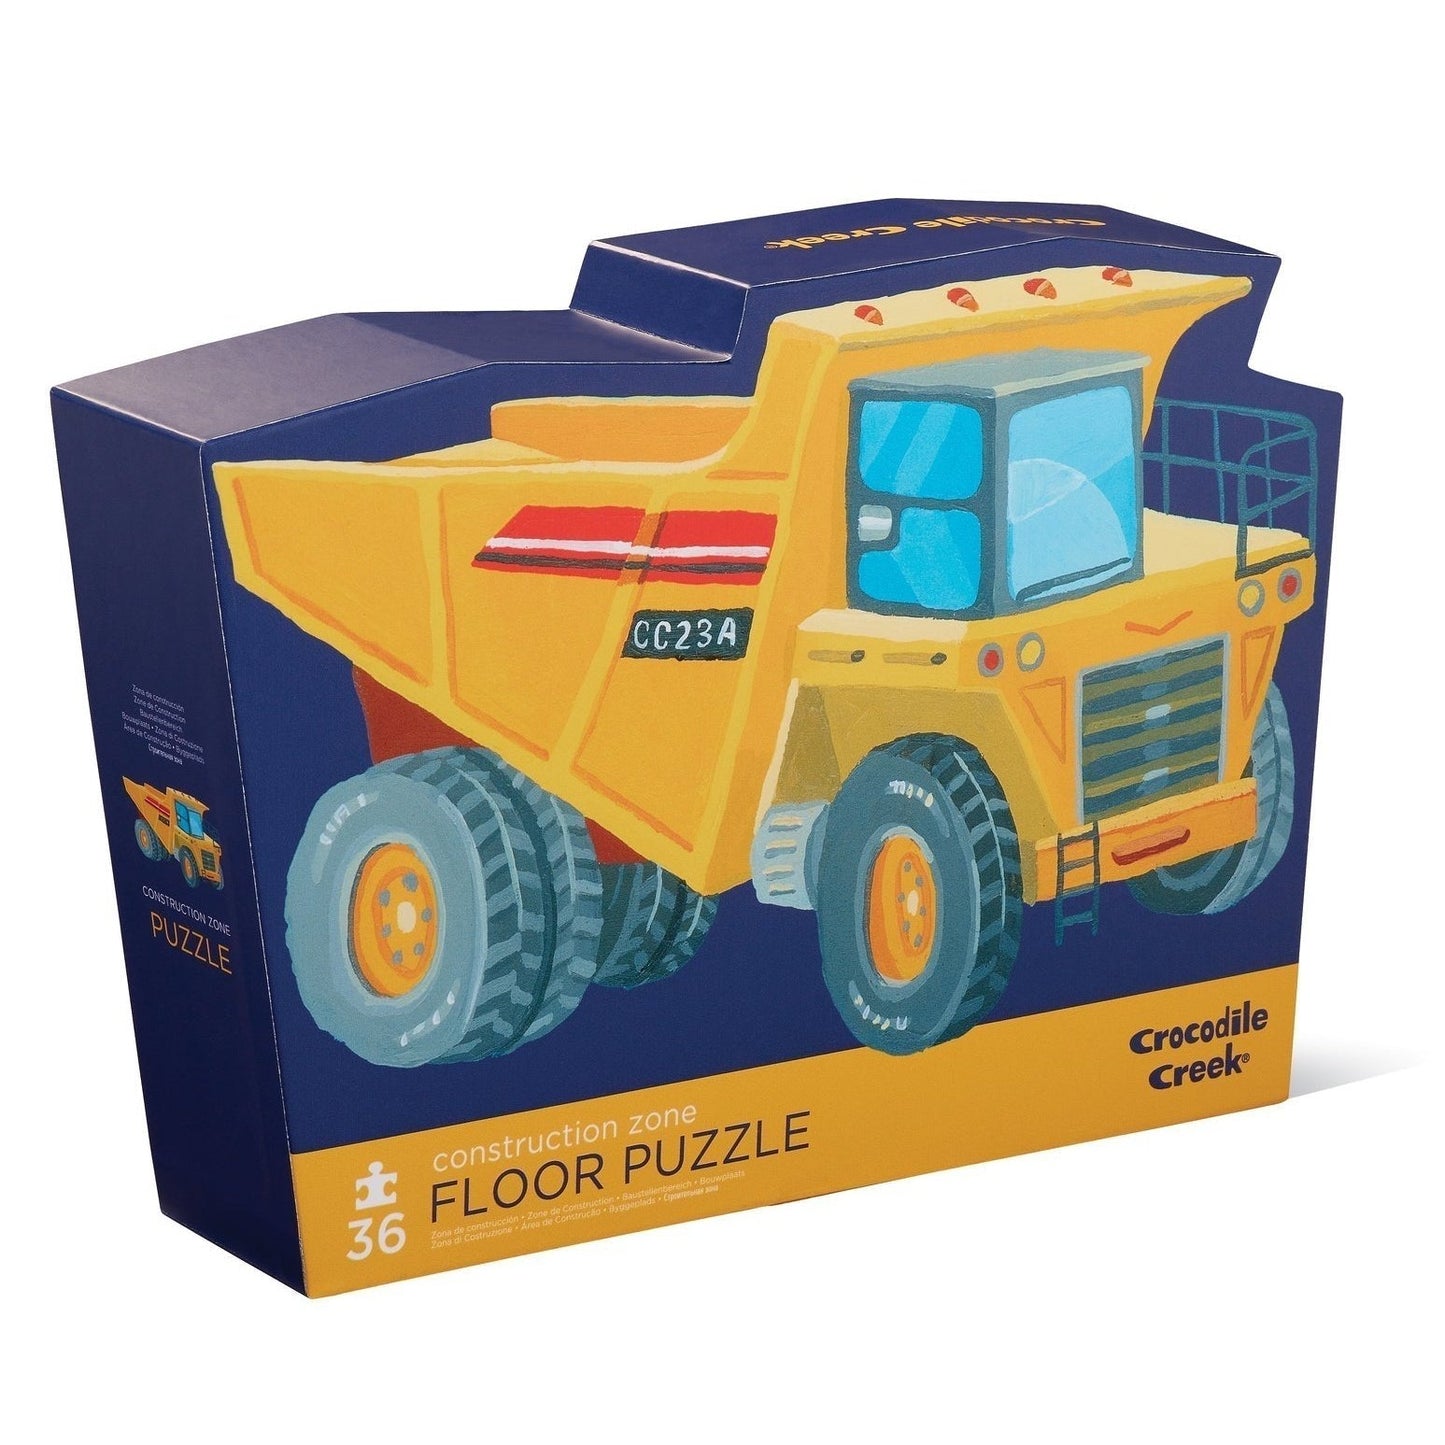 Classic Floor Puzzle 36 Piece - Construction Zone - Crocodile Creek - Toybox Tales